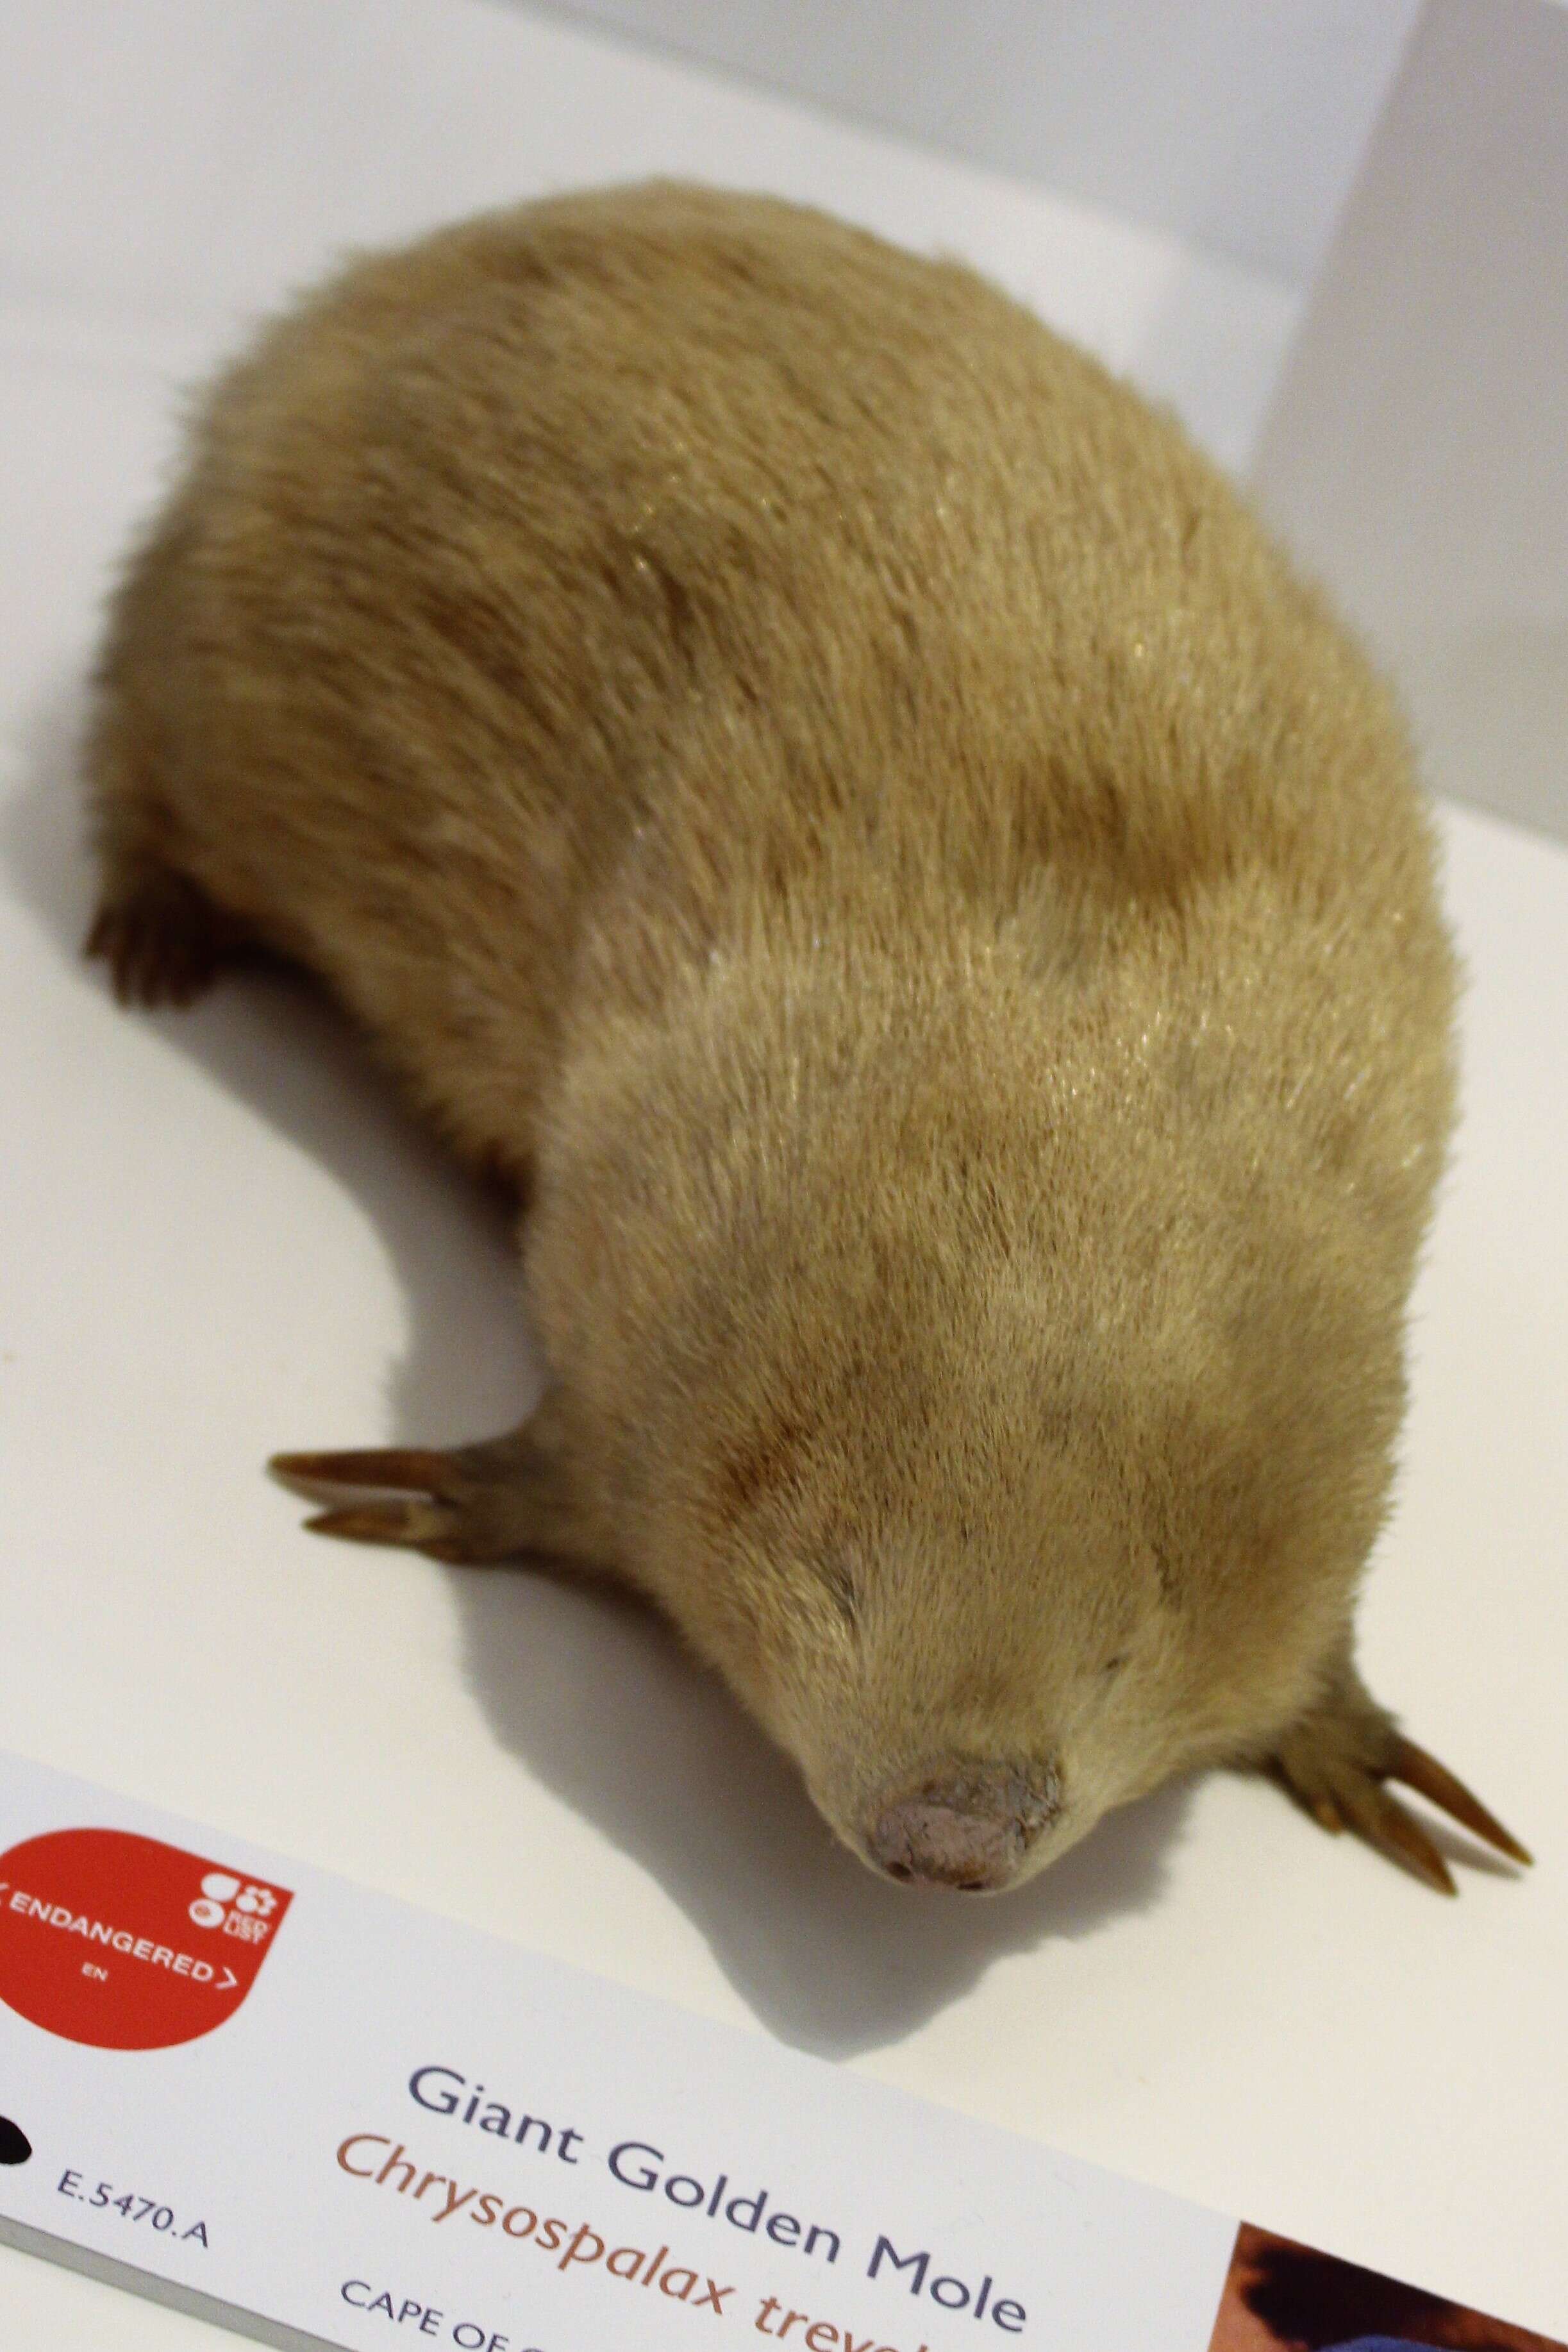 Image of giant golden mole